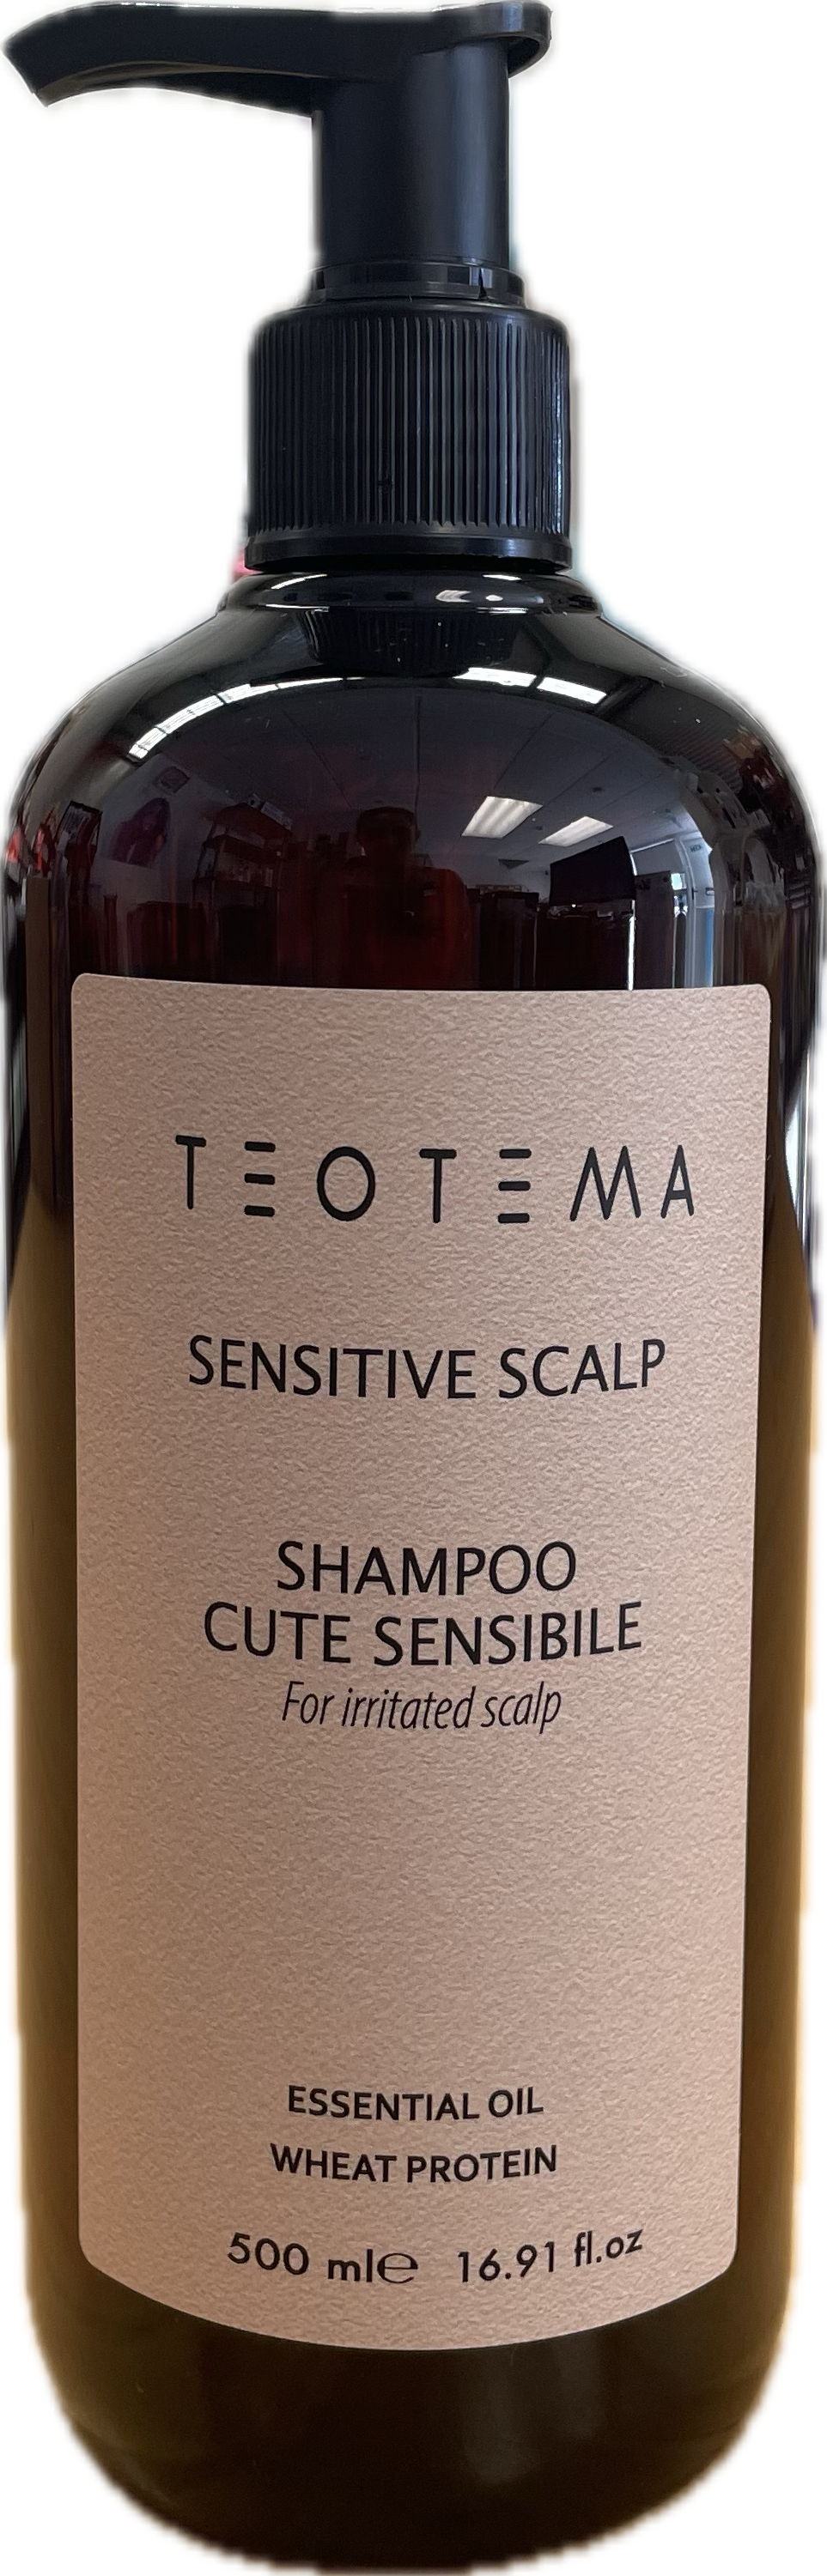 Teotema Sensitive Scalp Shampoo 500ml